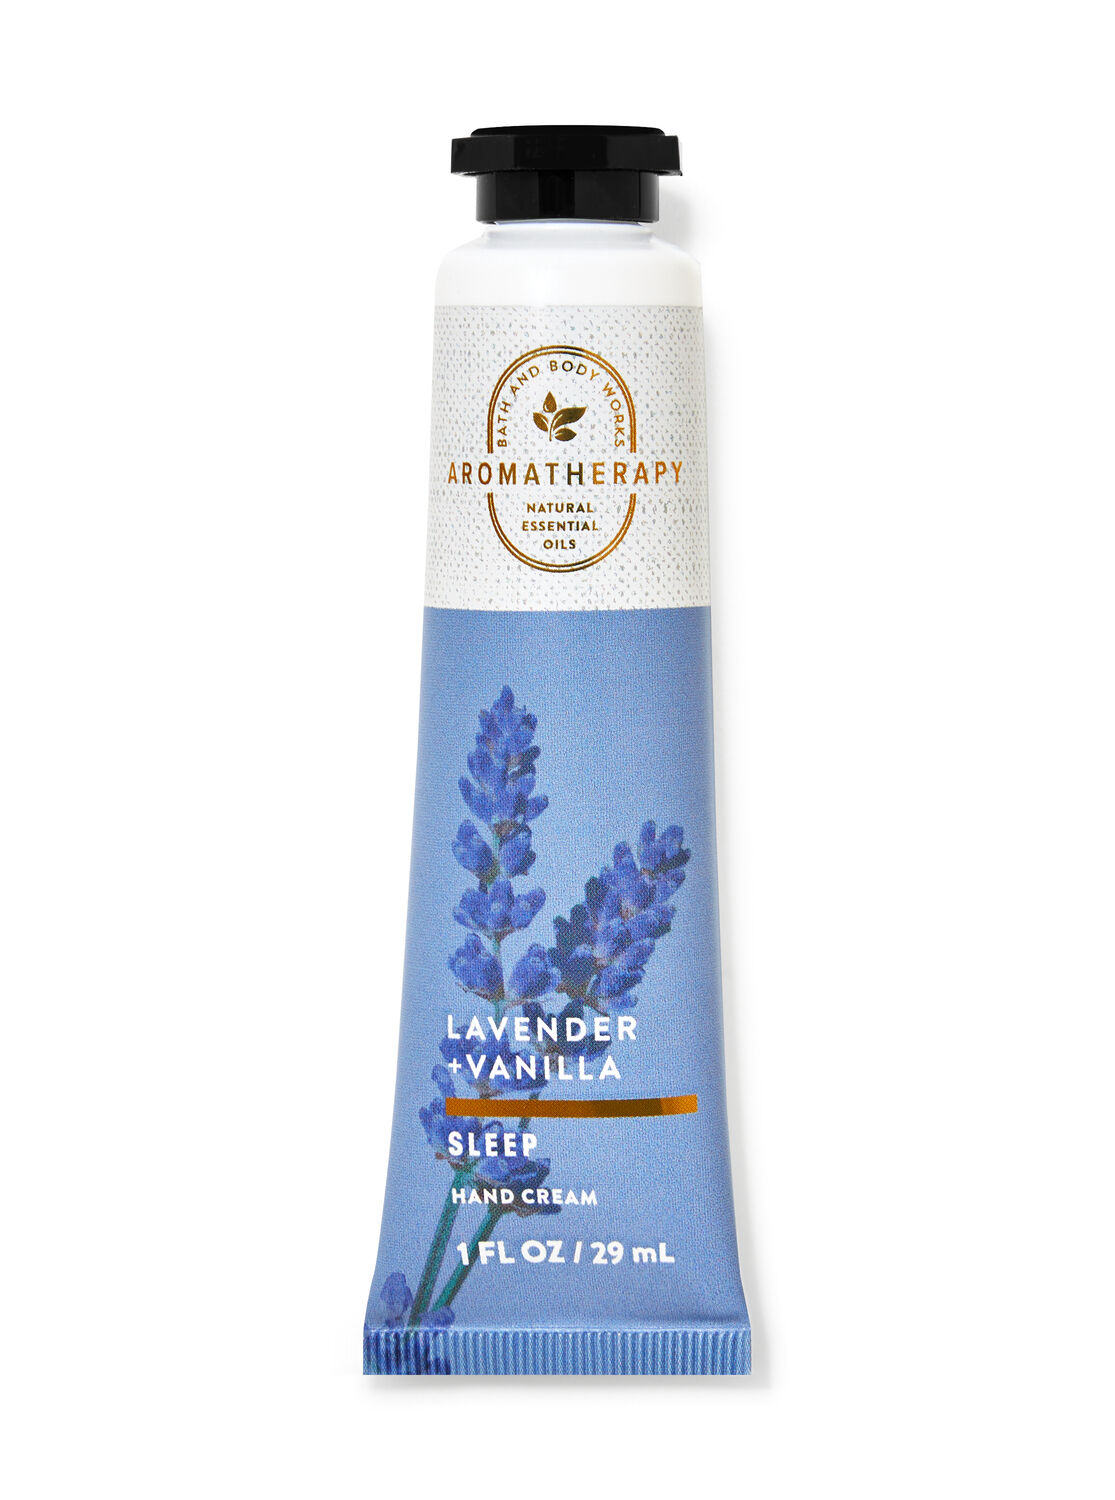 Lavender Vanilla Hand Cream - Aromatherapy | Bath & Works